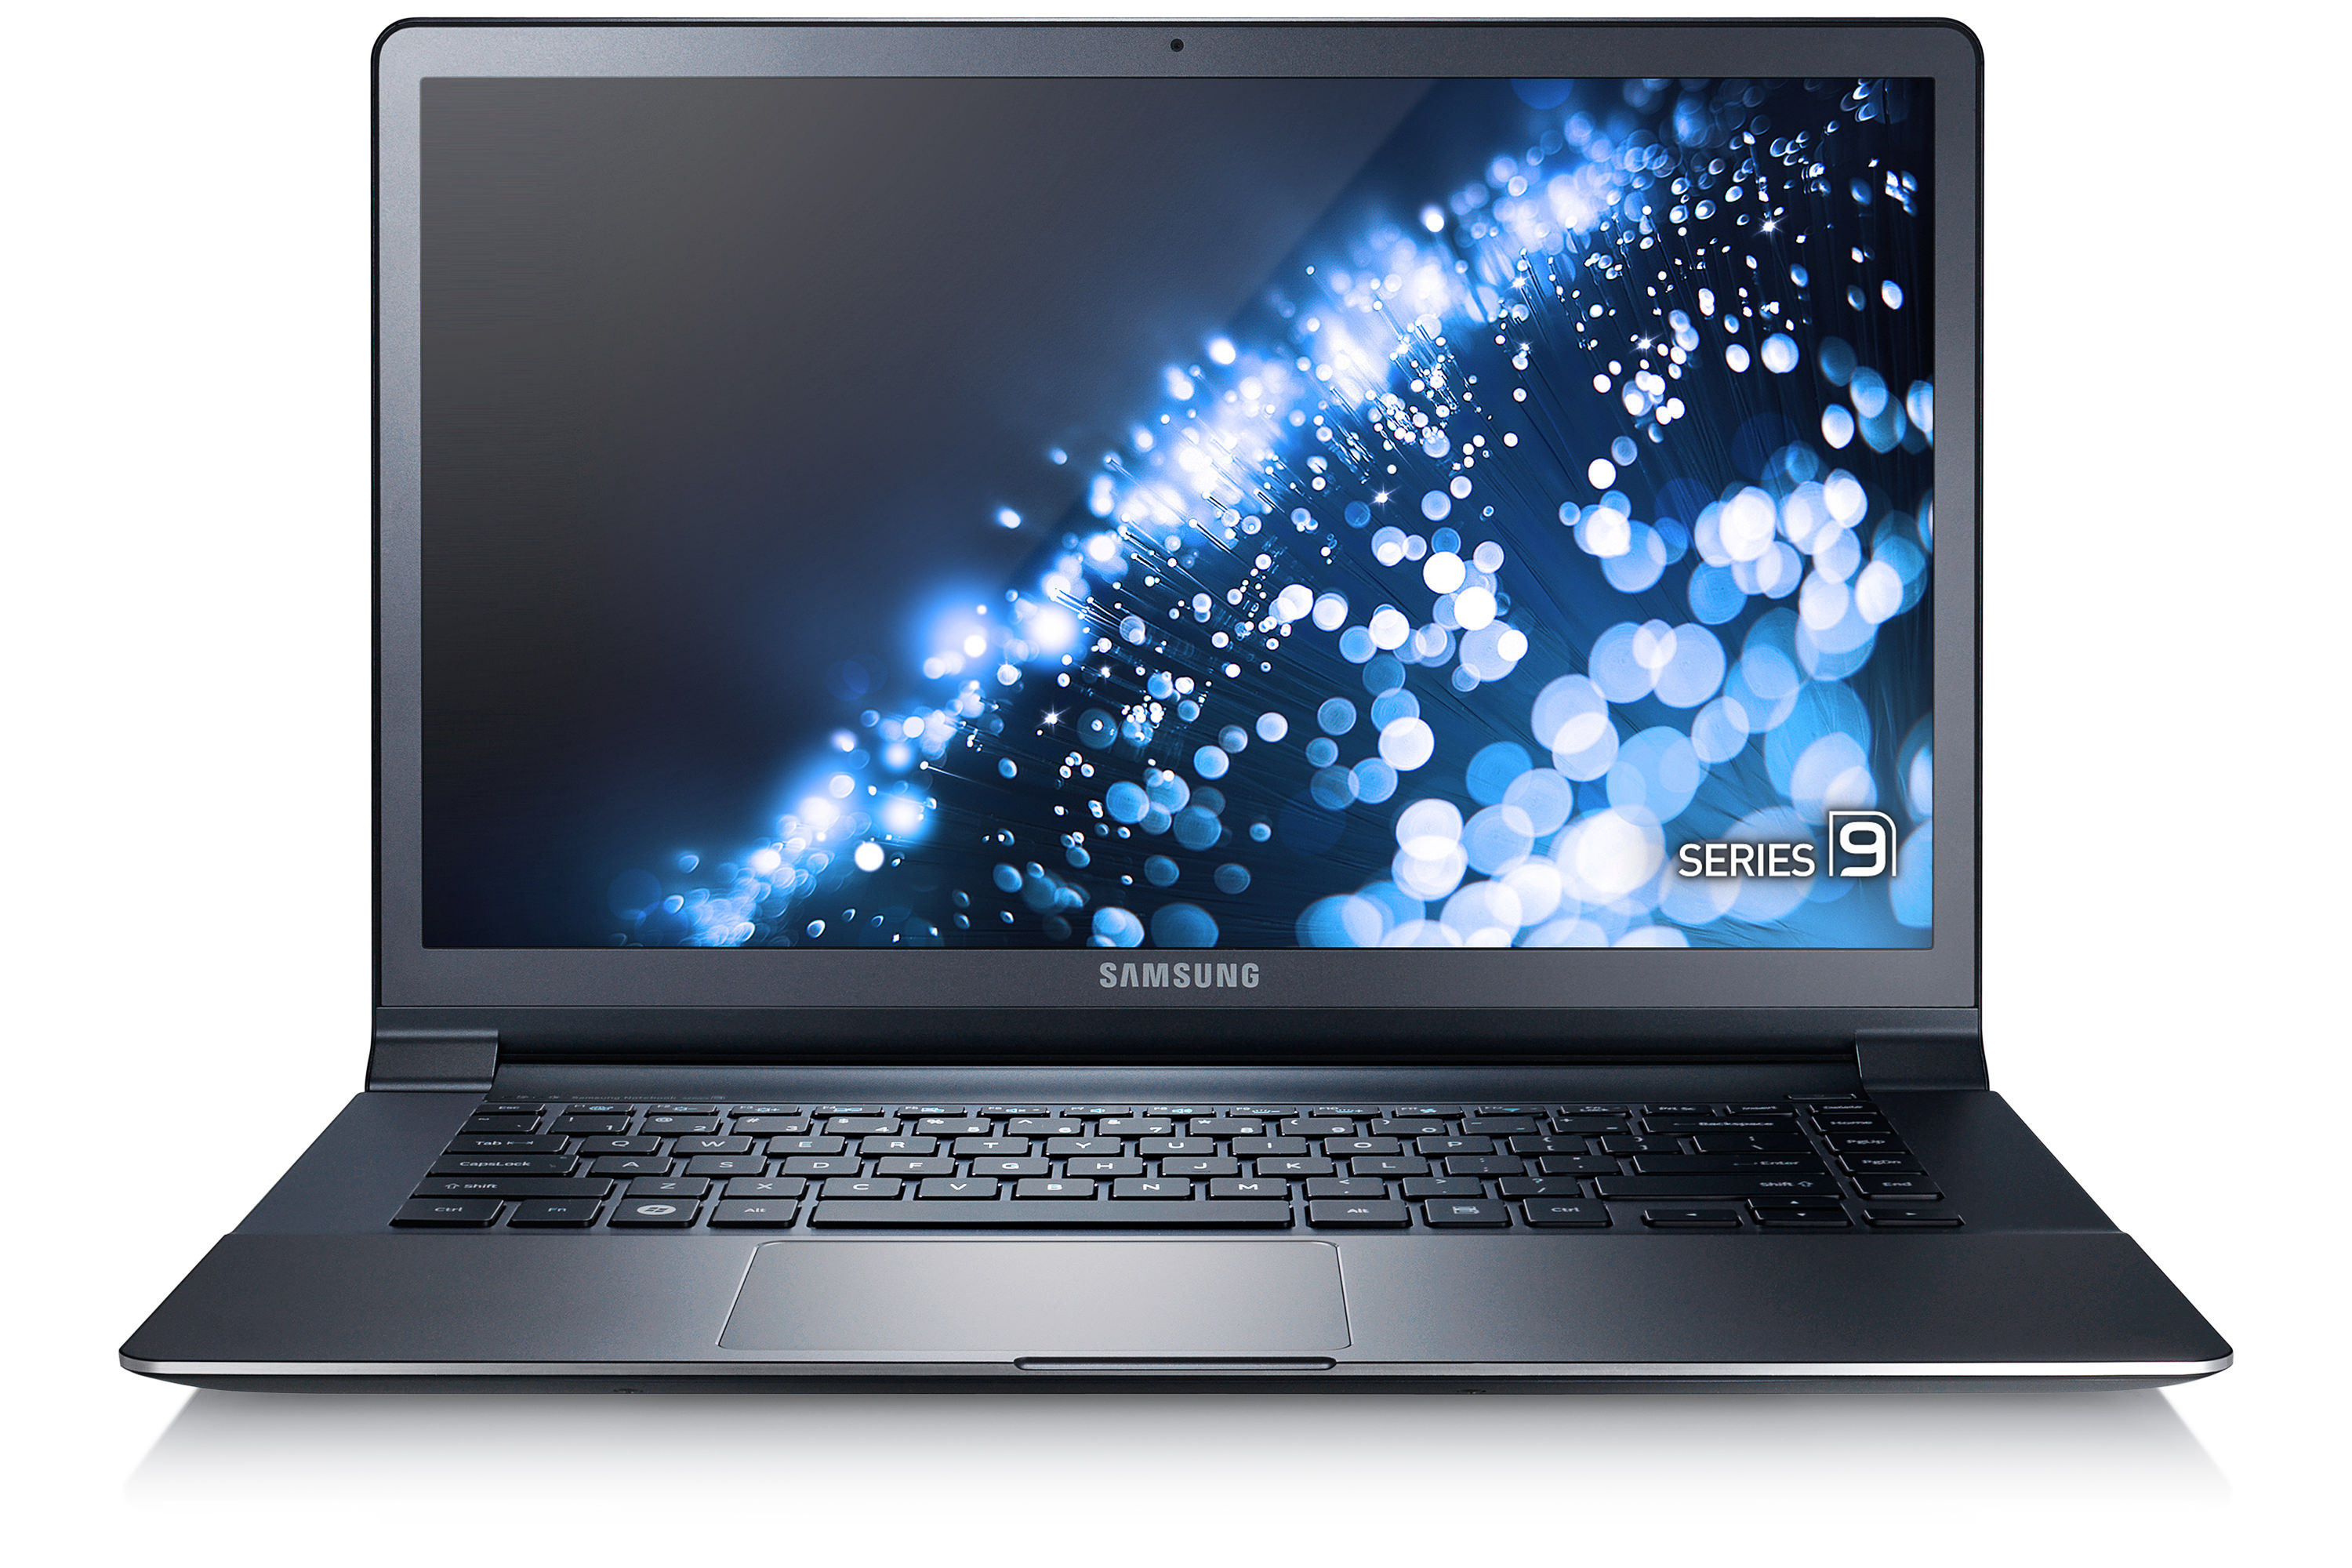 Samsung Series 9 NP900X4C-A02IN ( Core i7 3rd Gen / 8 GB / Windows 8